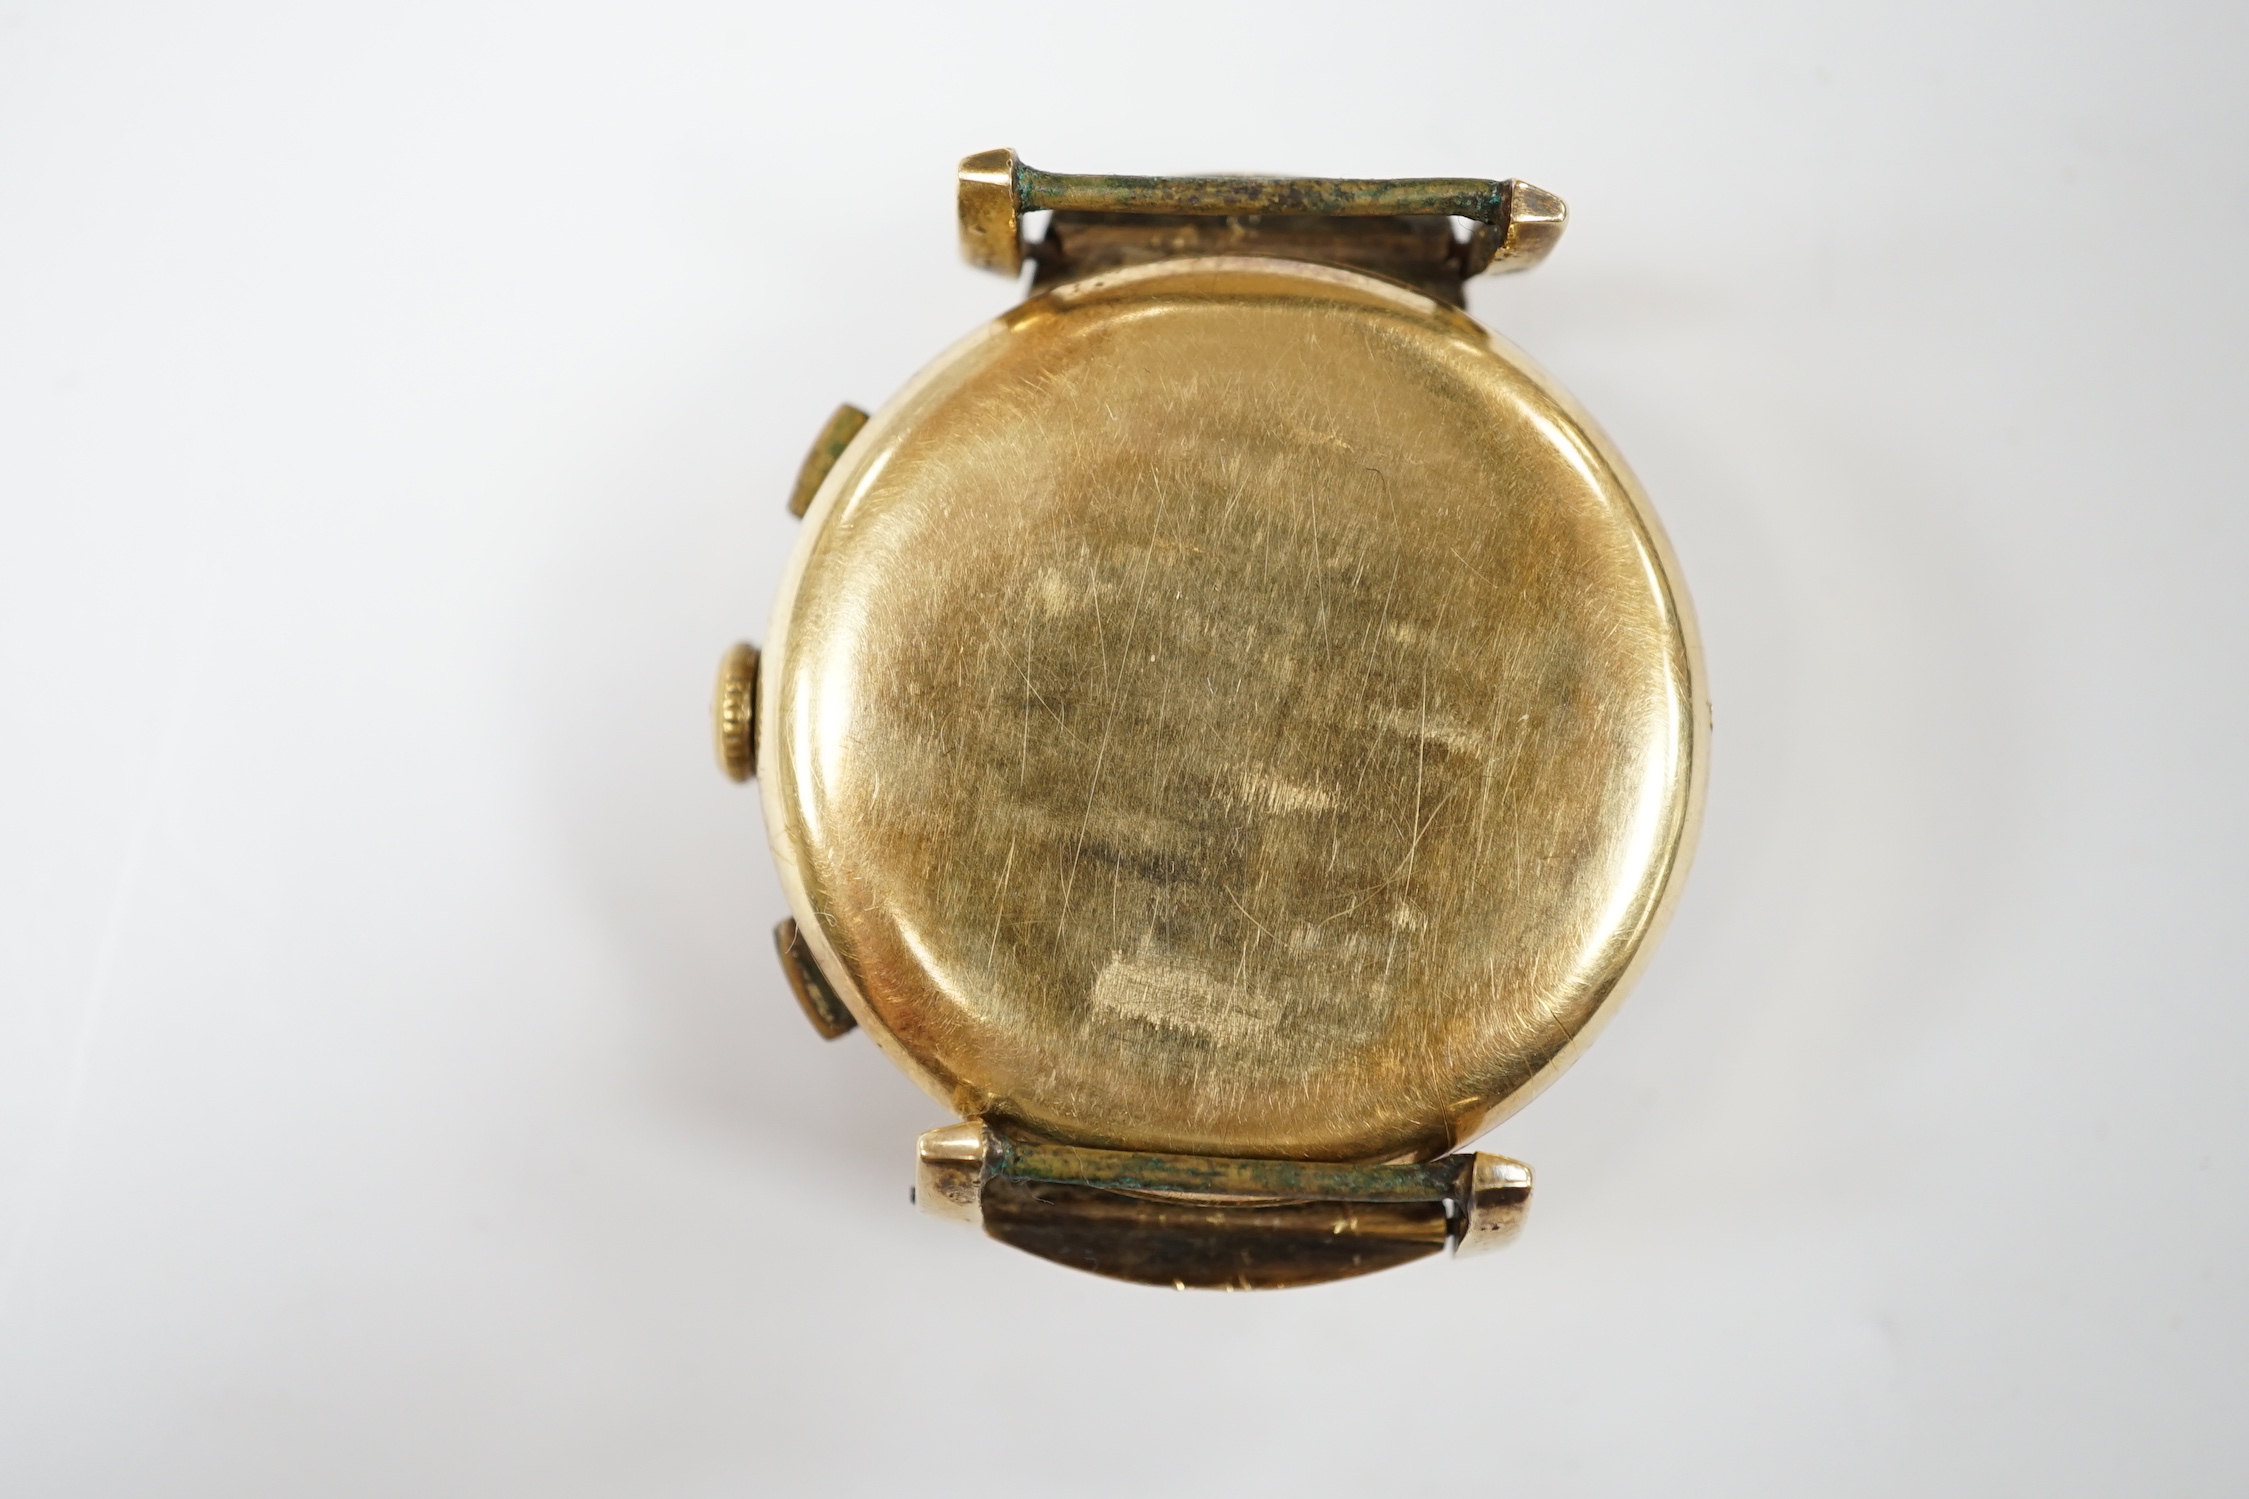 A gentleman's gilt metal Marvin chronograph manual wind black dial wrist watch, no strap, case diameter 36mm.